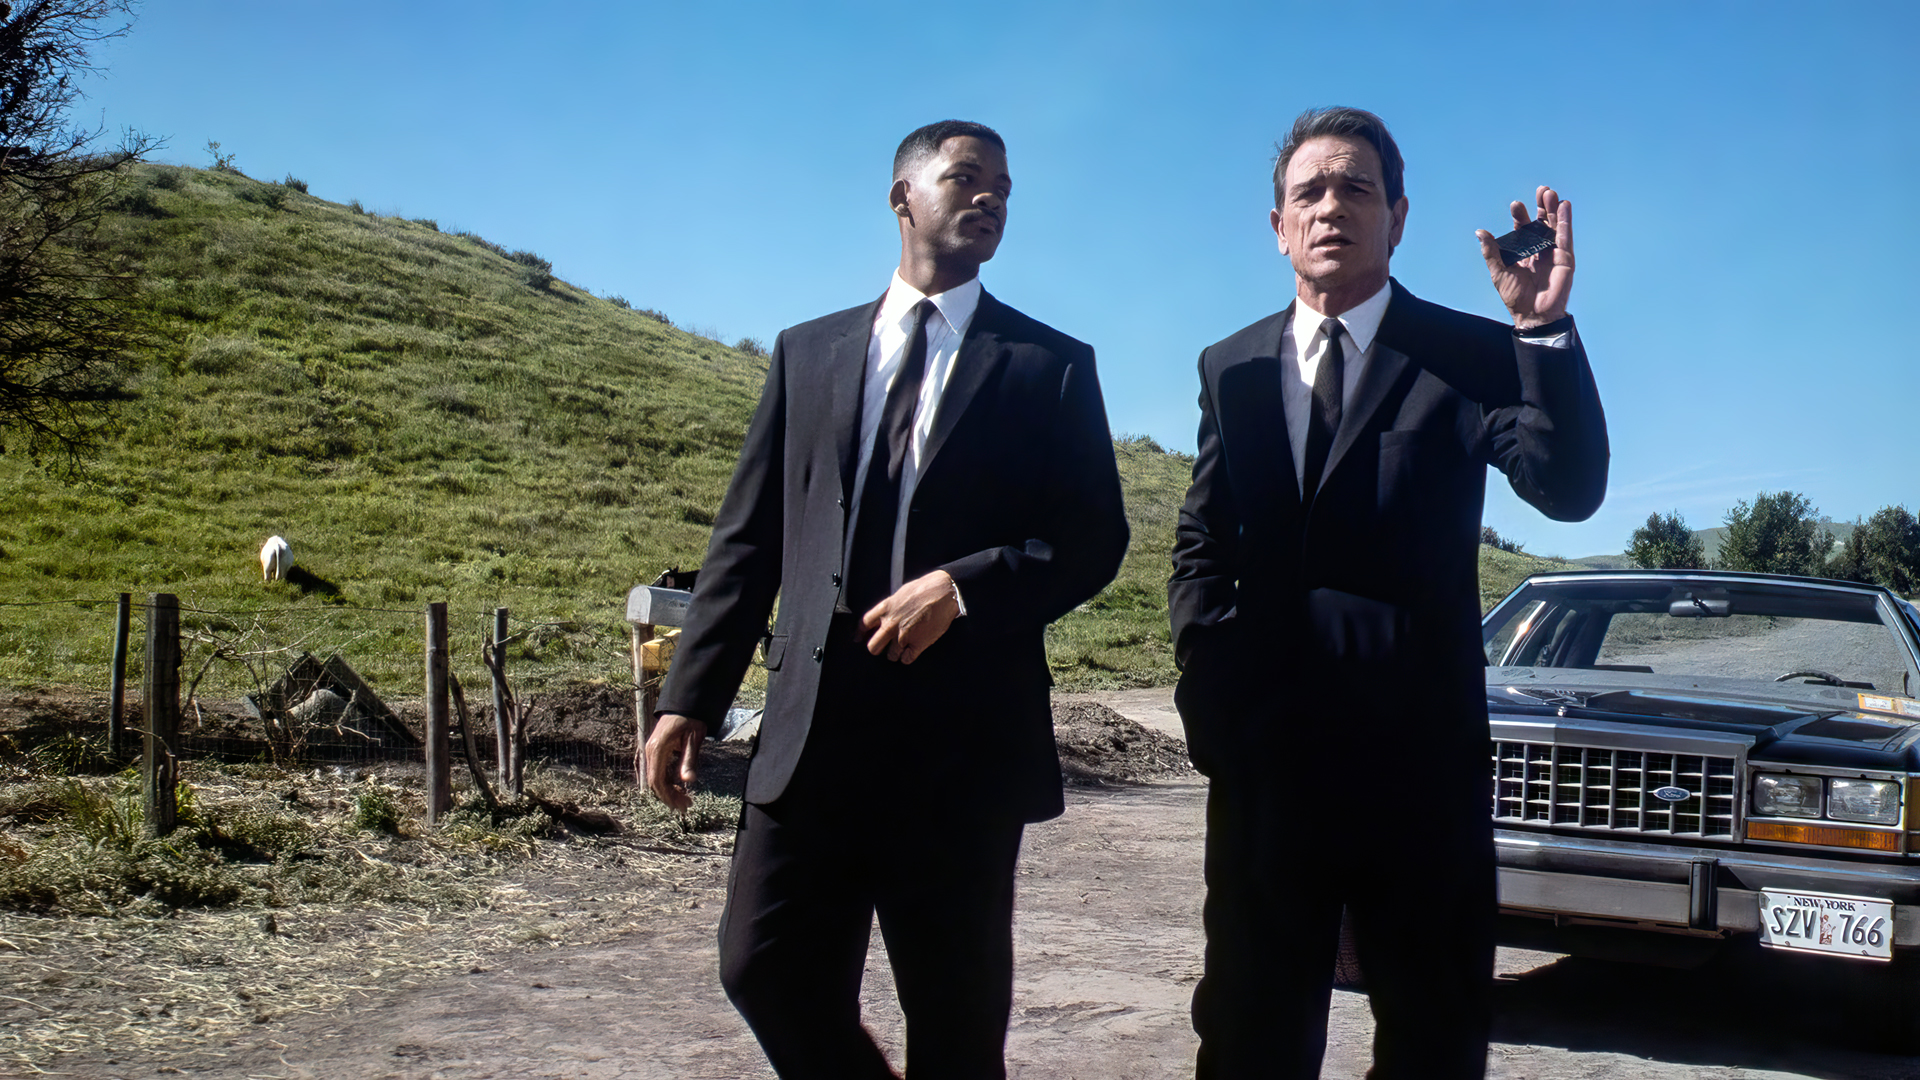 Men In Black Movies Film Stills Will Smith Tommy Lee Jones Agent K Agent J Car Hills Sky Actor 1987  1920x1080